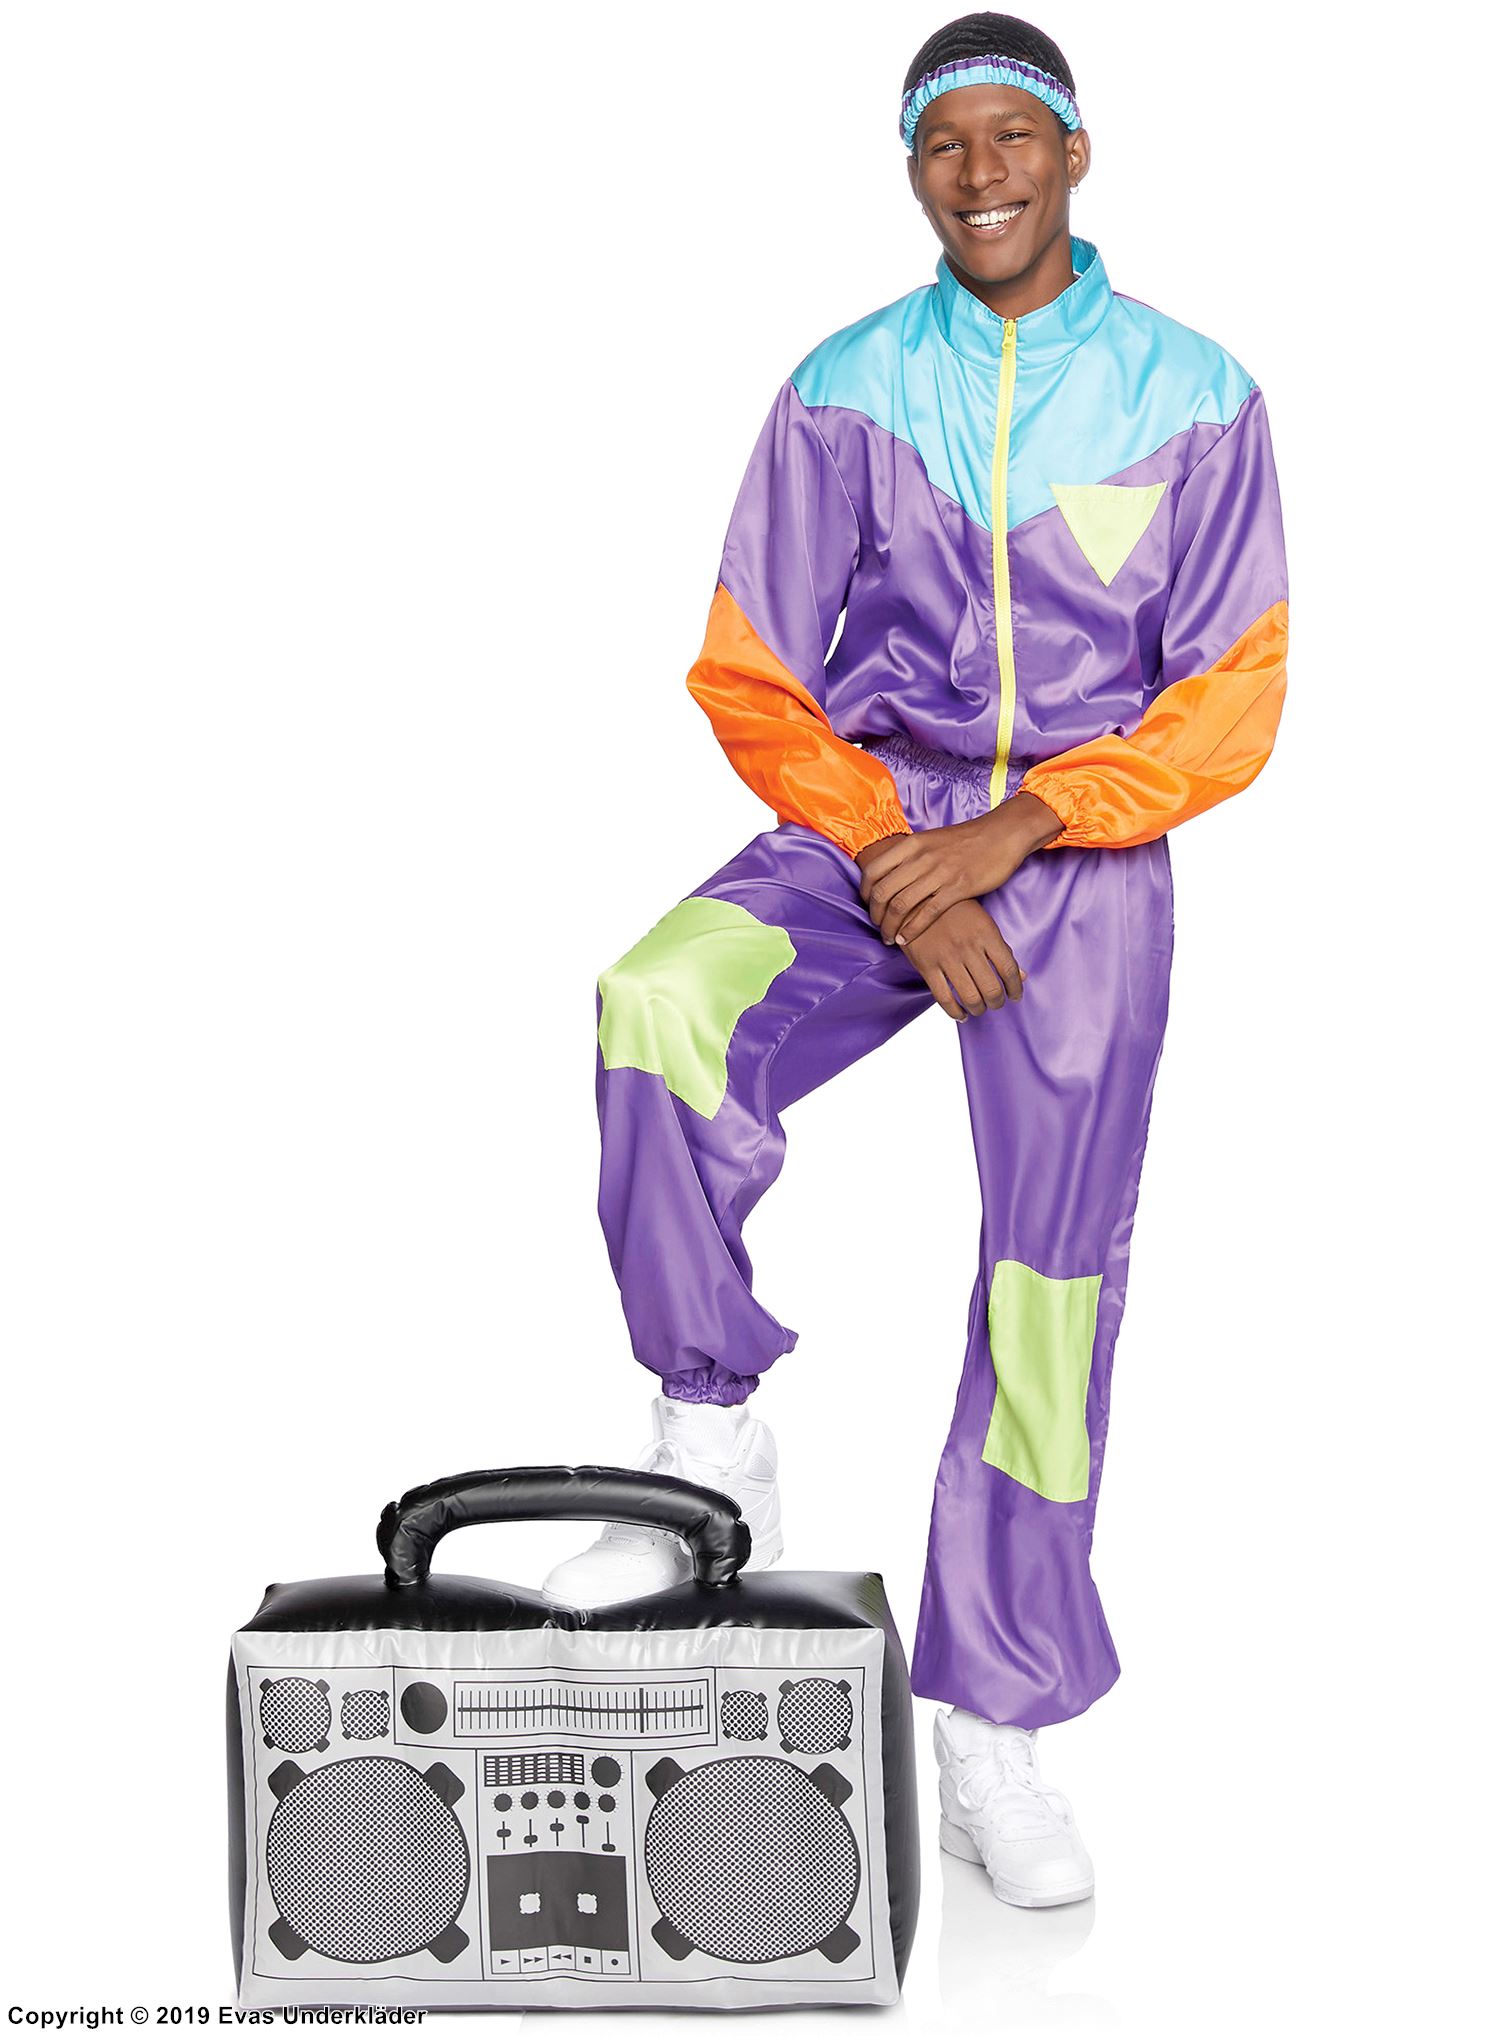 Herren-Skianzug aus den 80ern, Kostüm-Overall, Front-Reißverschluss, farbenfrohe Gestaltung